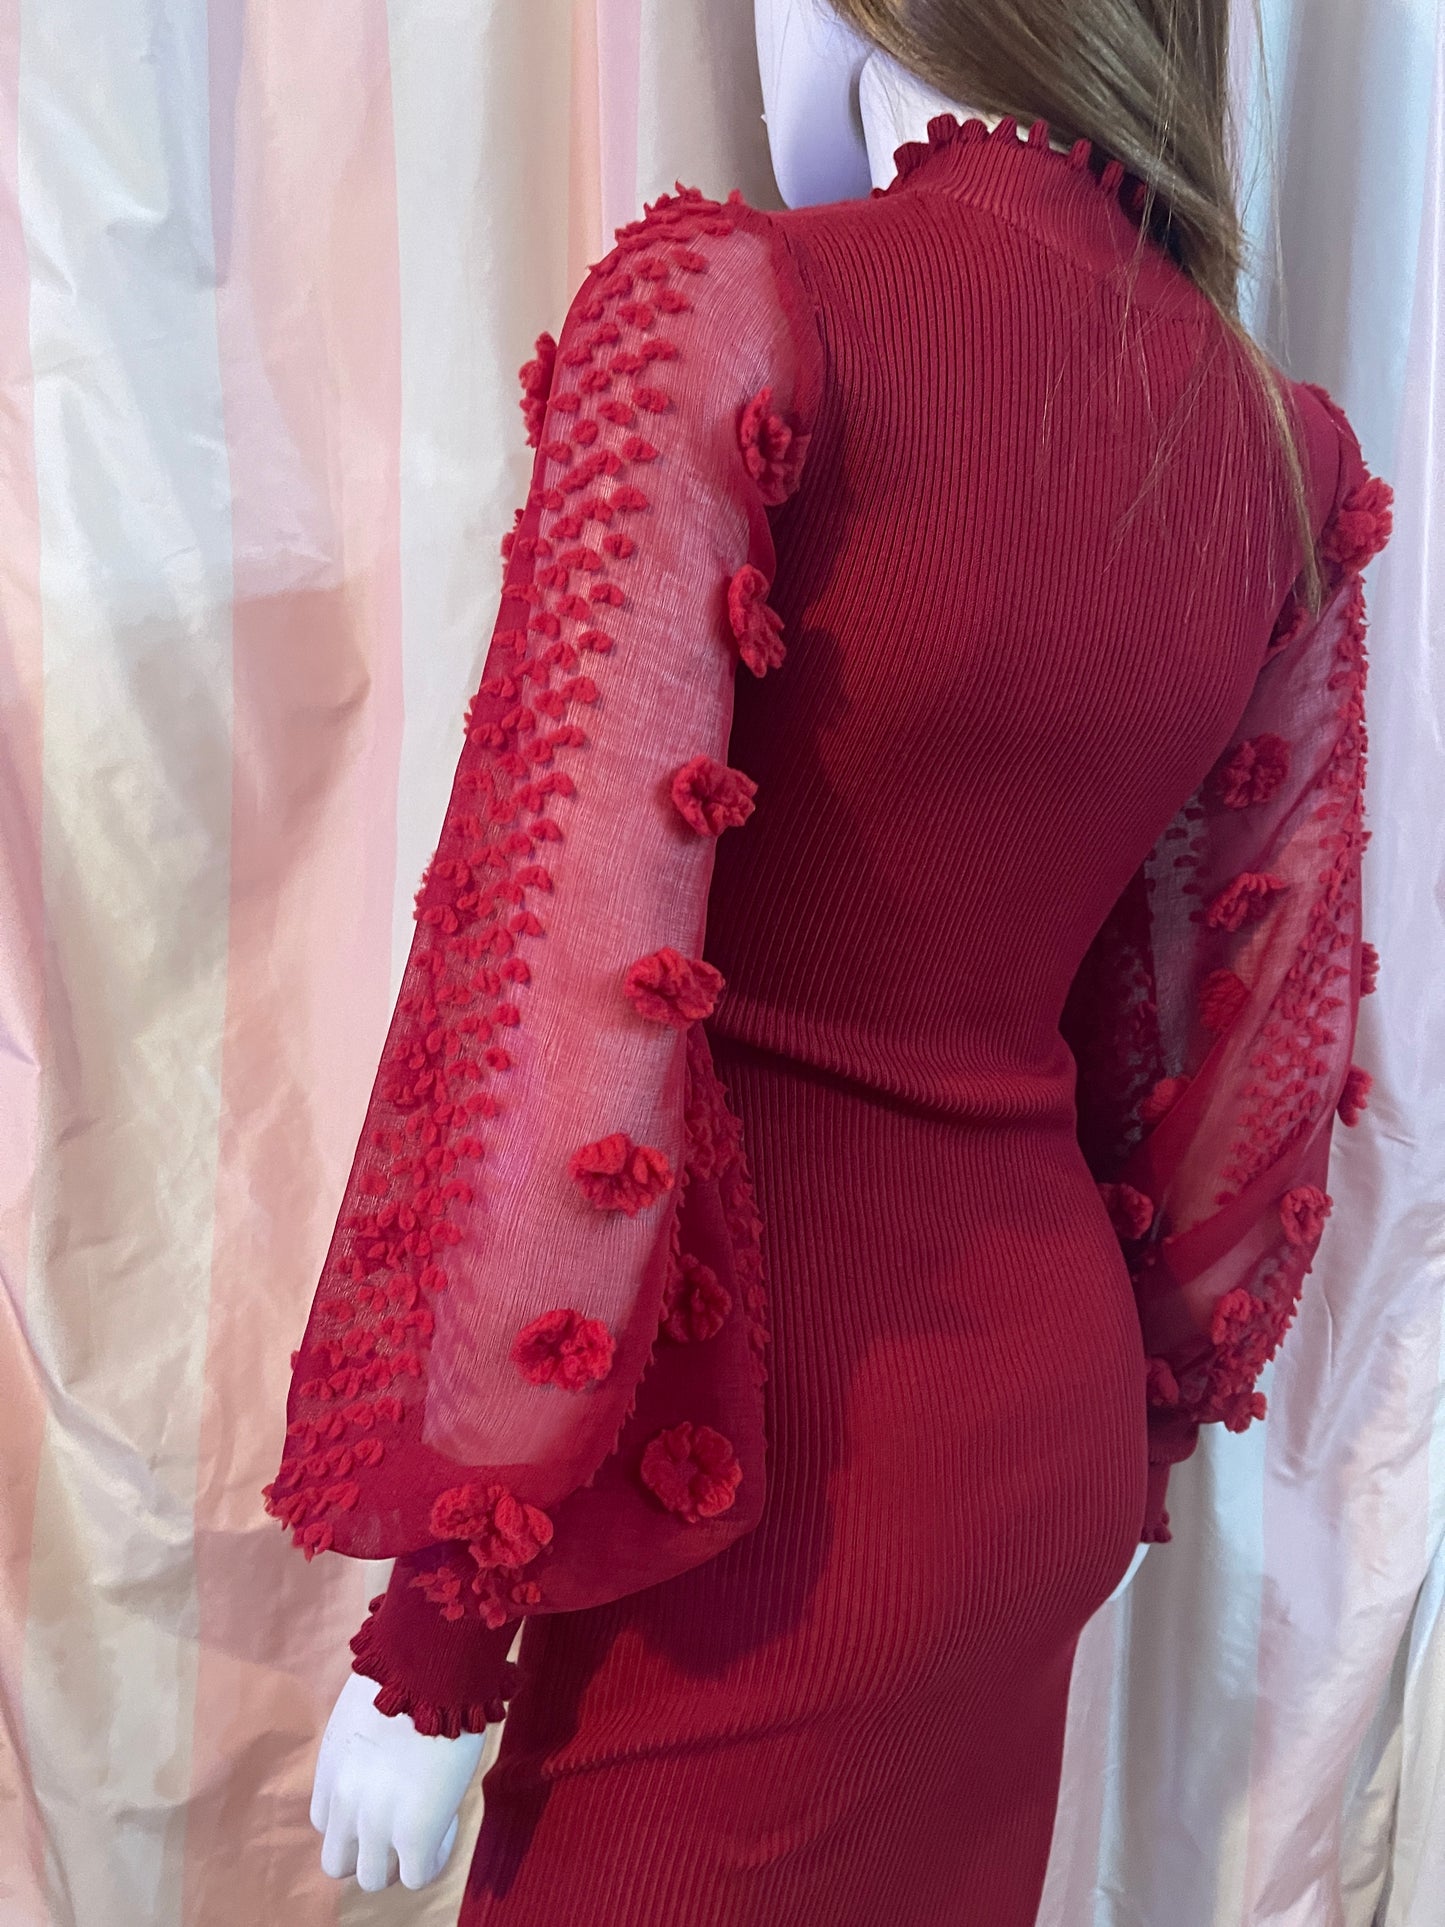 Red Lace Knit Sweater Dress